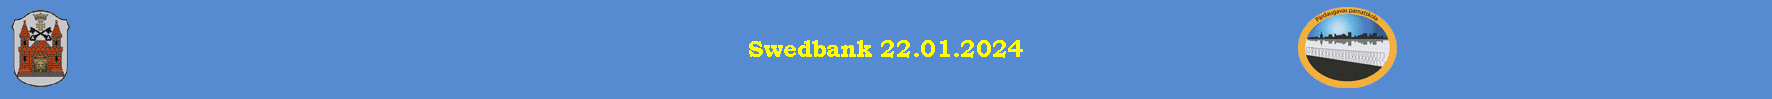 Swedbank 22.01.2024